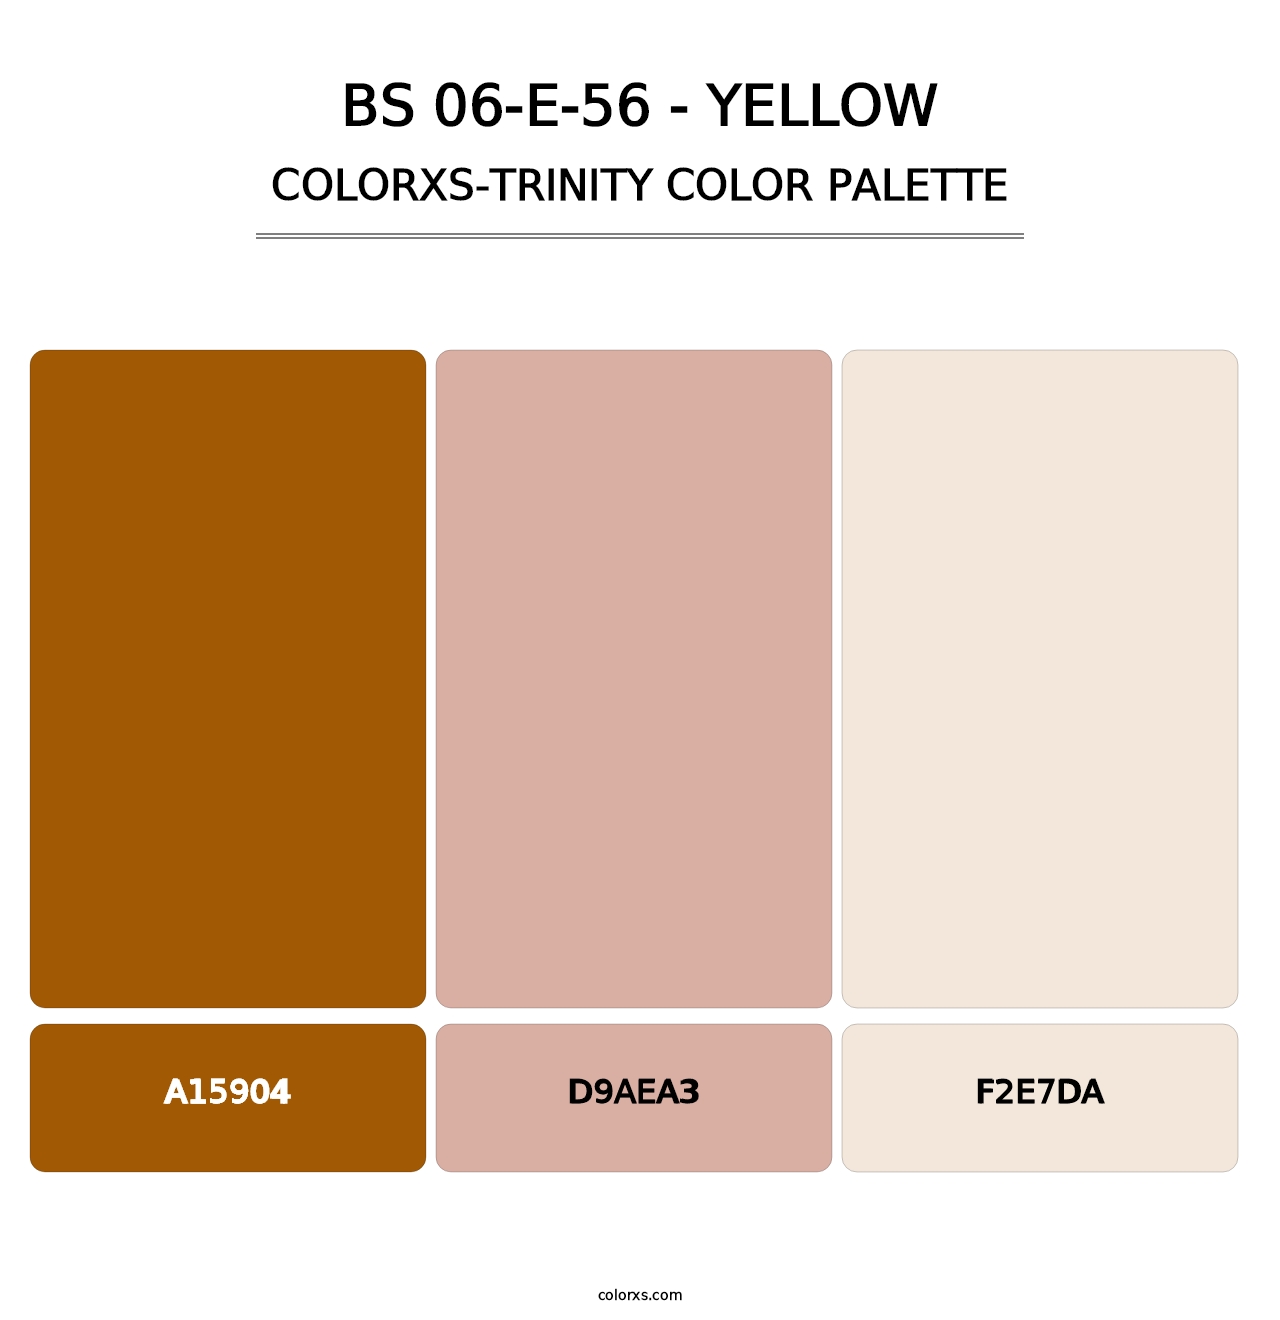 BS 06-E-56 - Yellow - Colorxs Trinity Palette